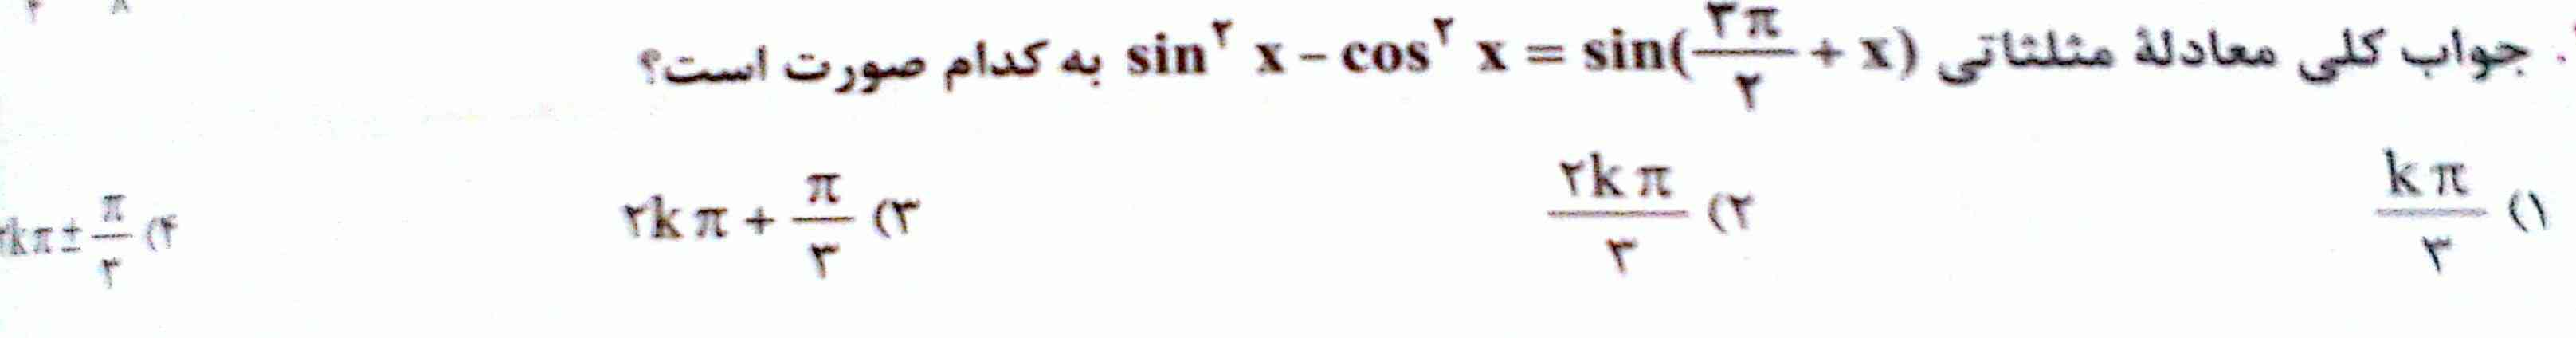 کسی می‌تونه این معادله رو حل کنه؟